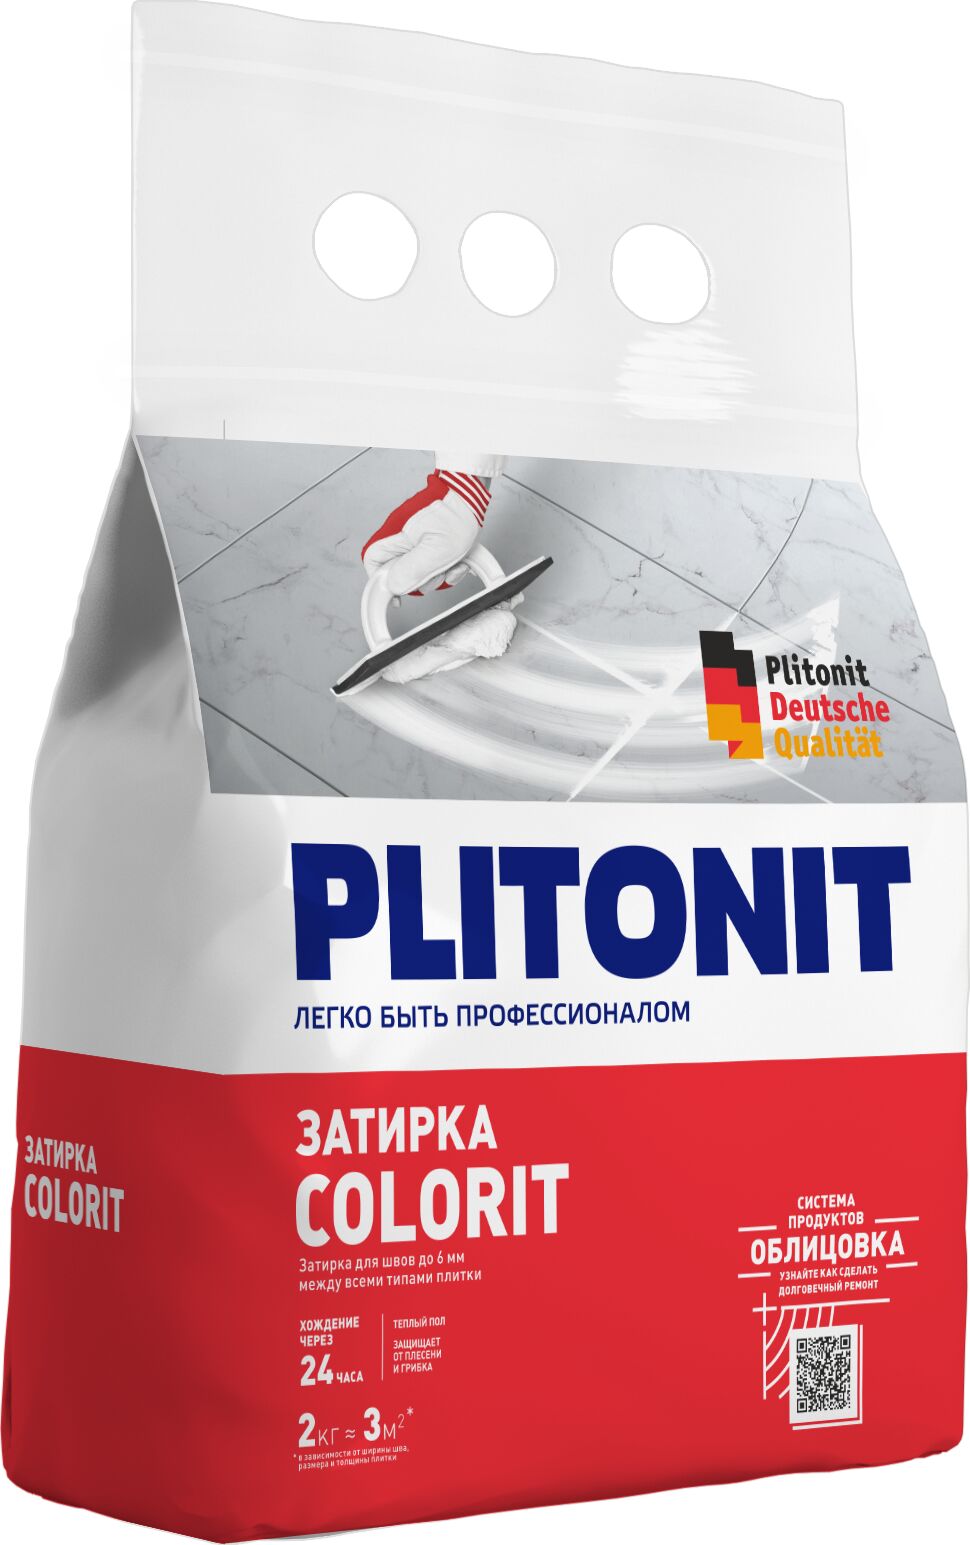 PLITONIT Colorit затирка между всеми типами плитки (1,5-6 мм) СВЕТЛО-РОЗОВАЯ-2 , PLITONIT Colorit затирка между всеми типами плитки (1,5-6 мм) СВЕТЛО-РОЗОВАЯ-2 